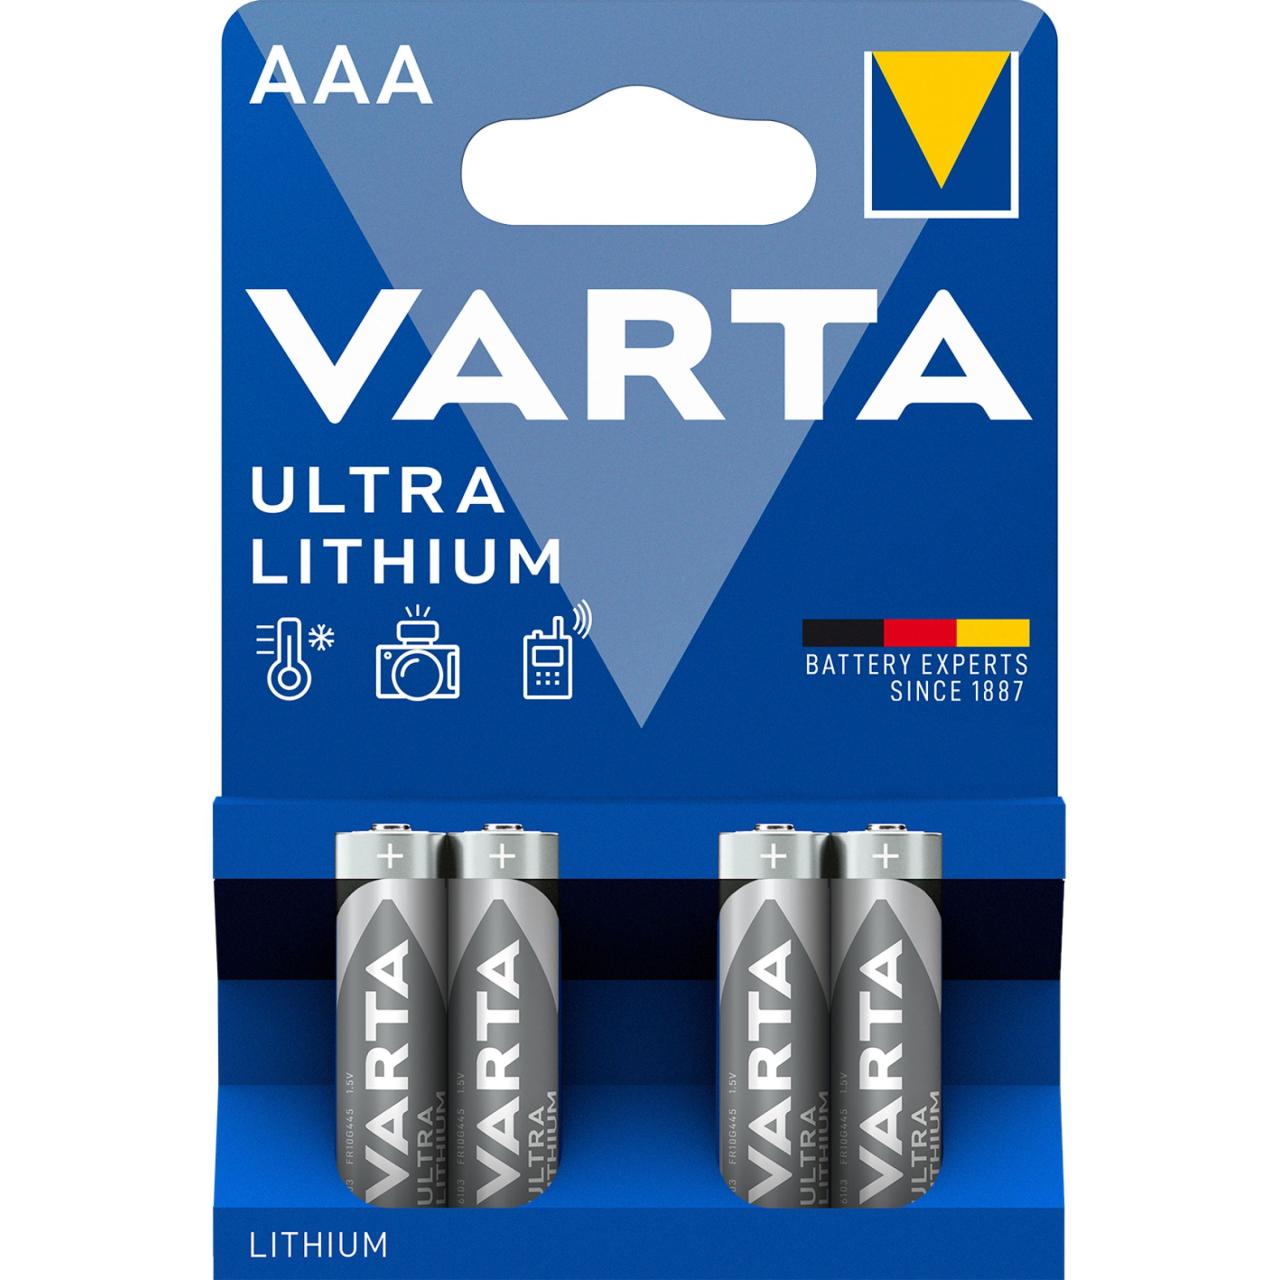 Varta Ultra Lithium AAA 4 stk pakning